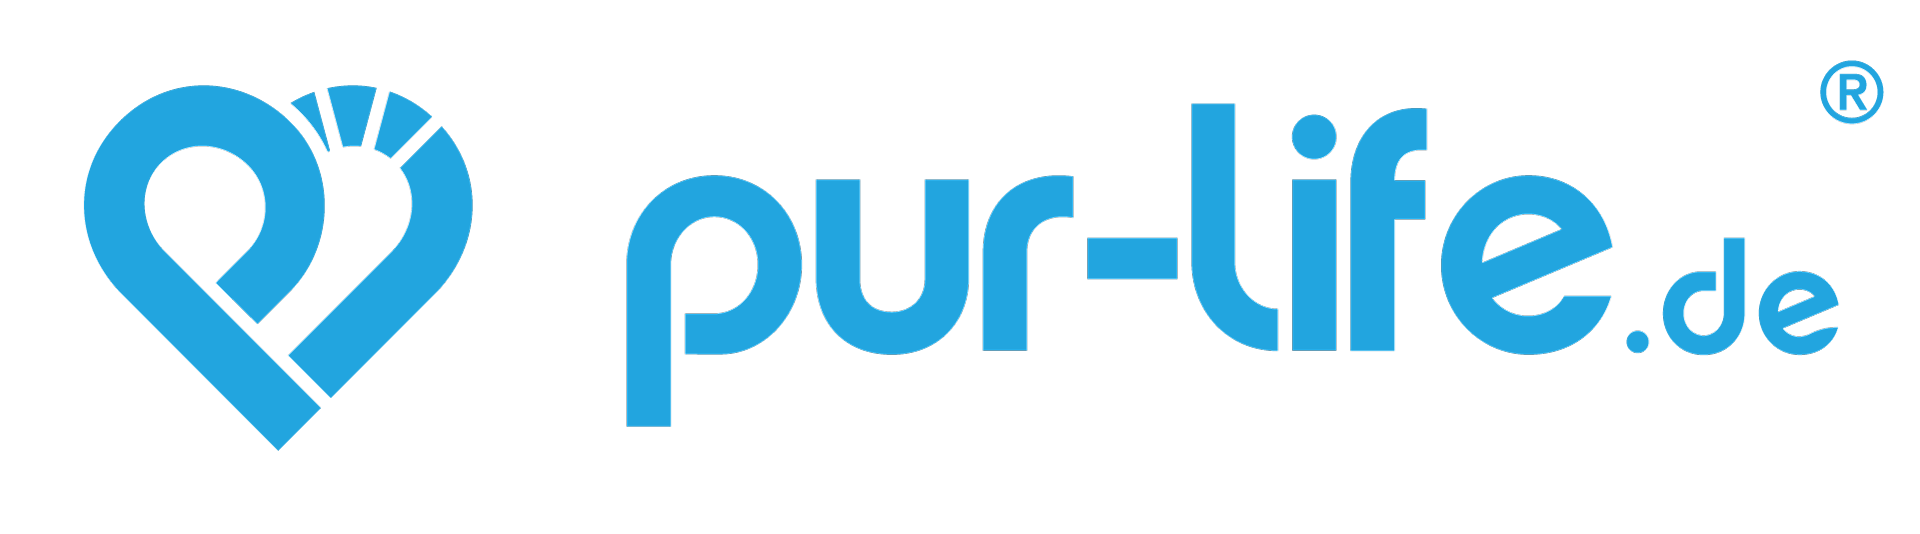 pur-life.de Logo